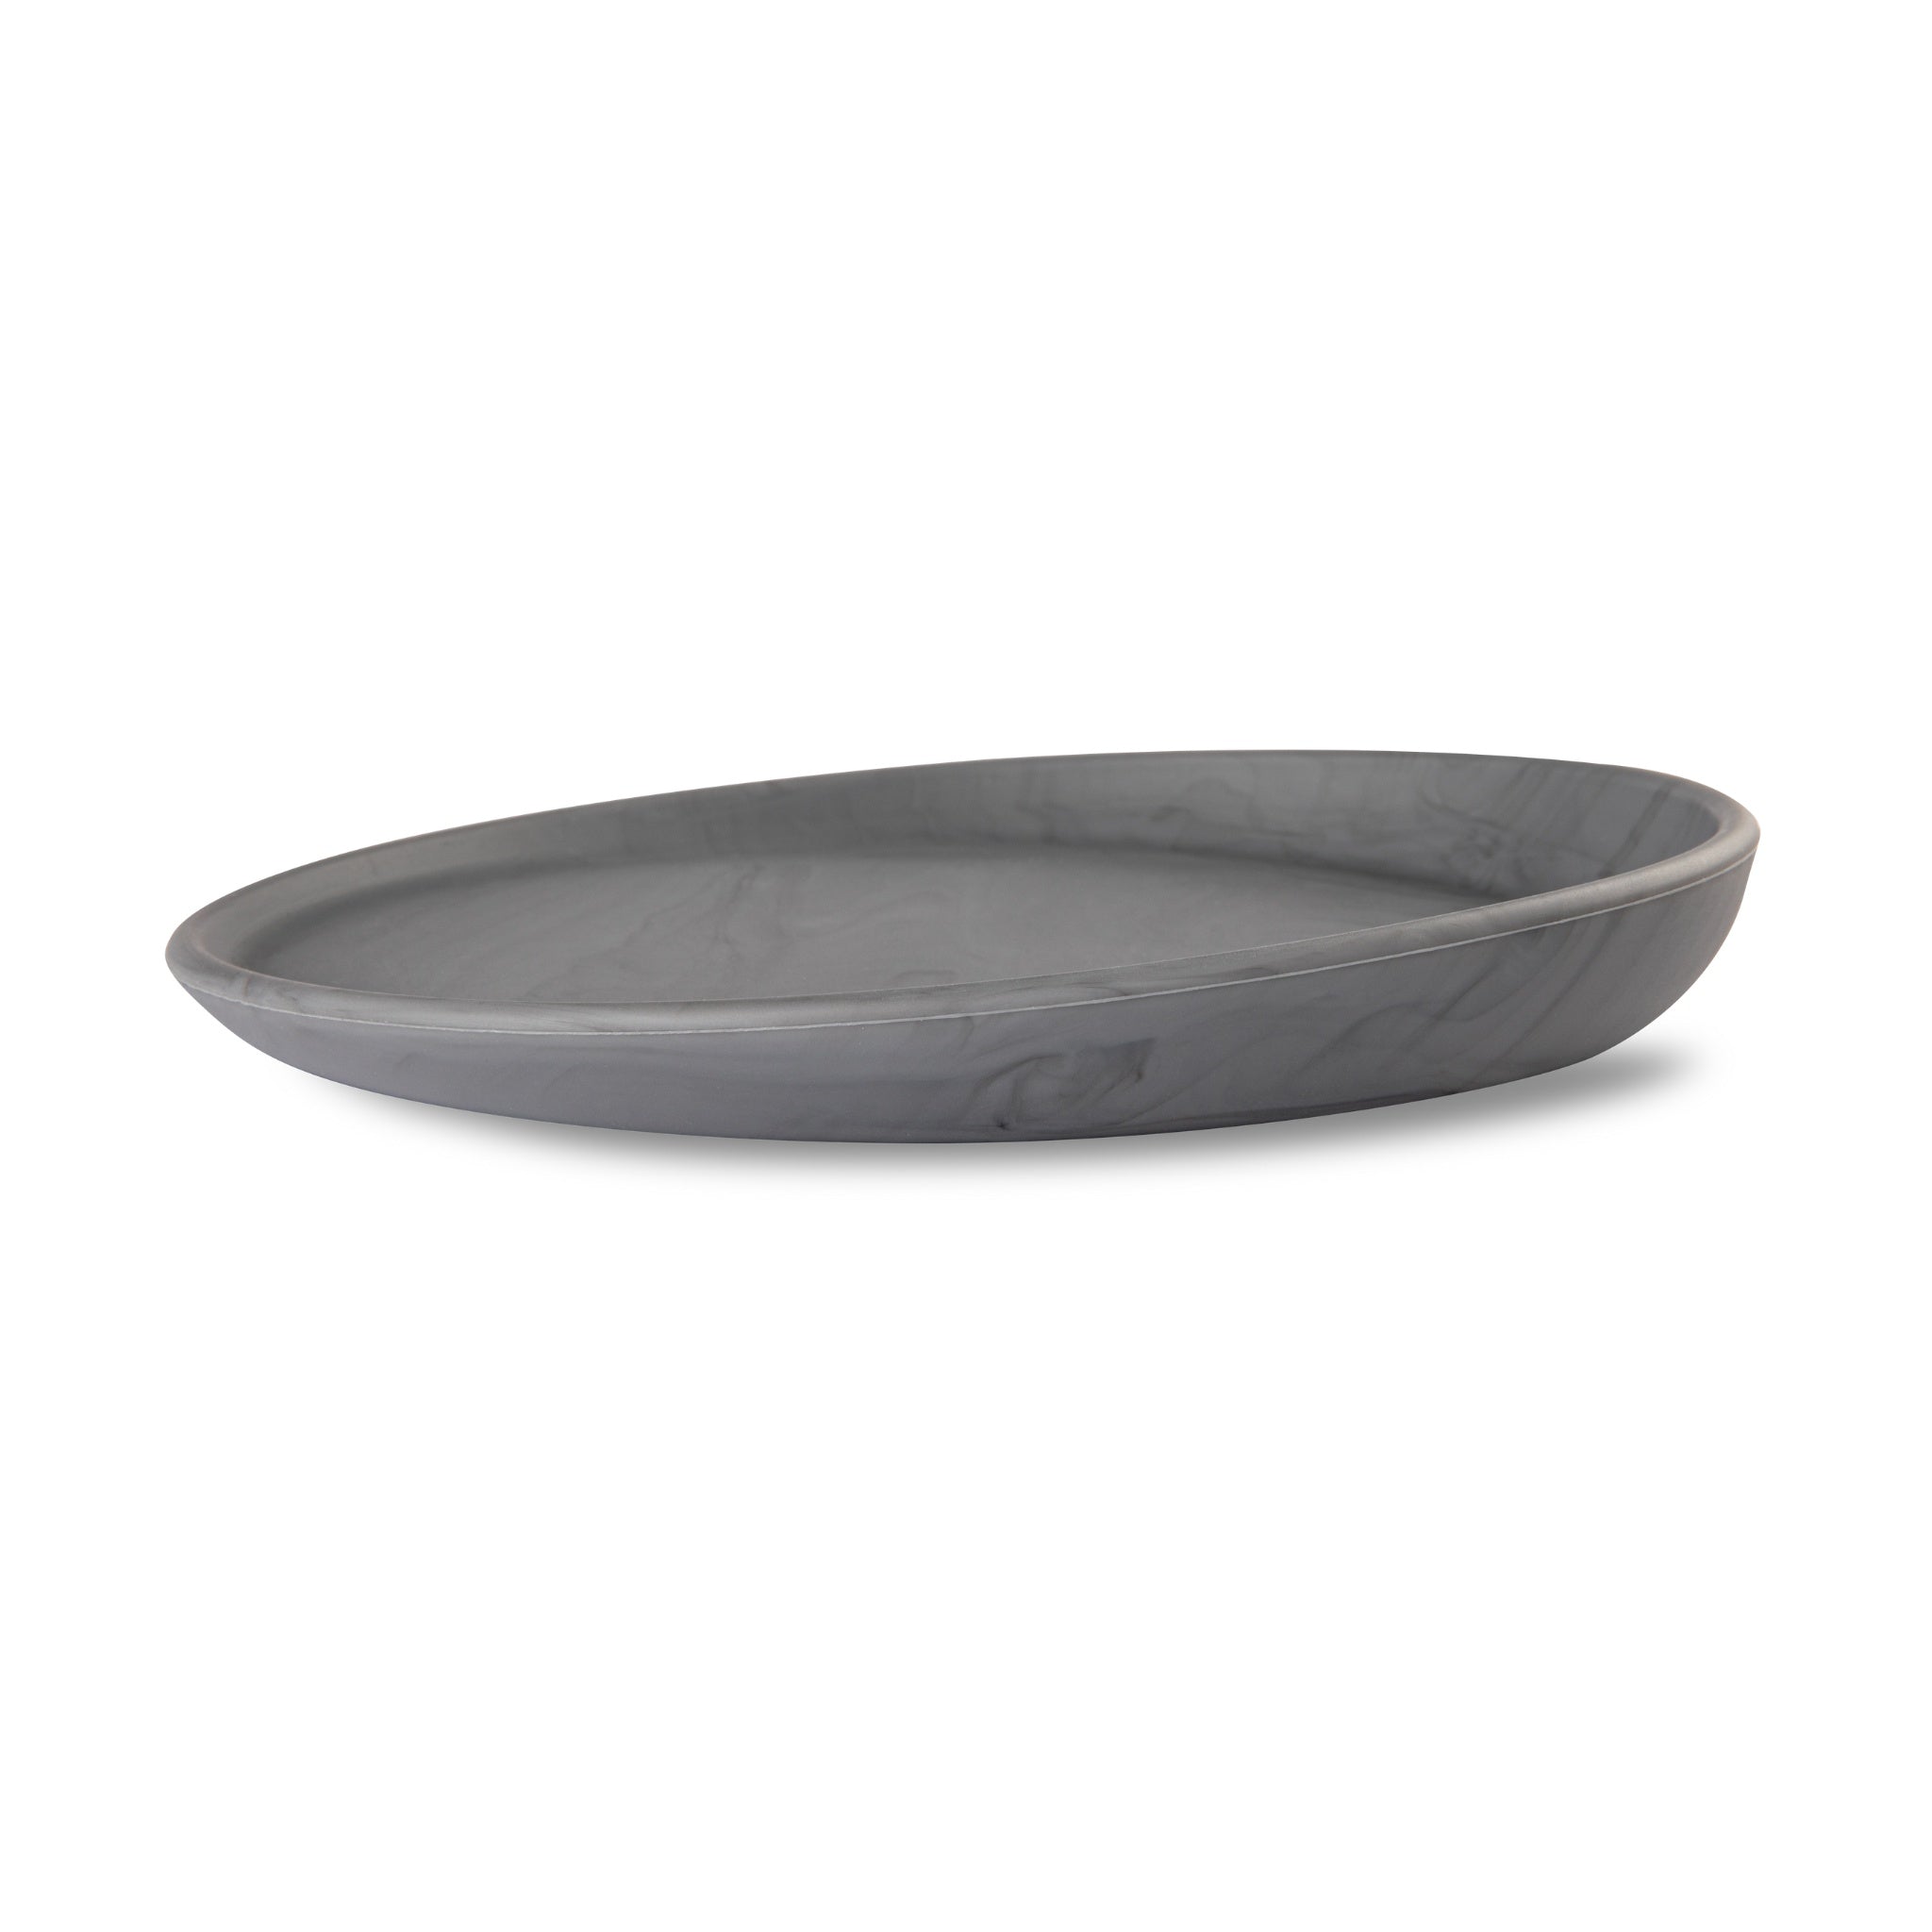 *eeveve* Silicone Plate large シリコンプレート L - Marble - Granite Gray